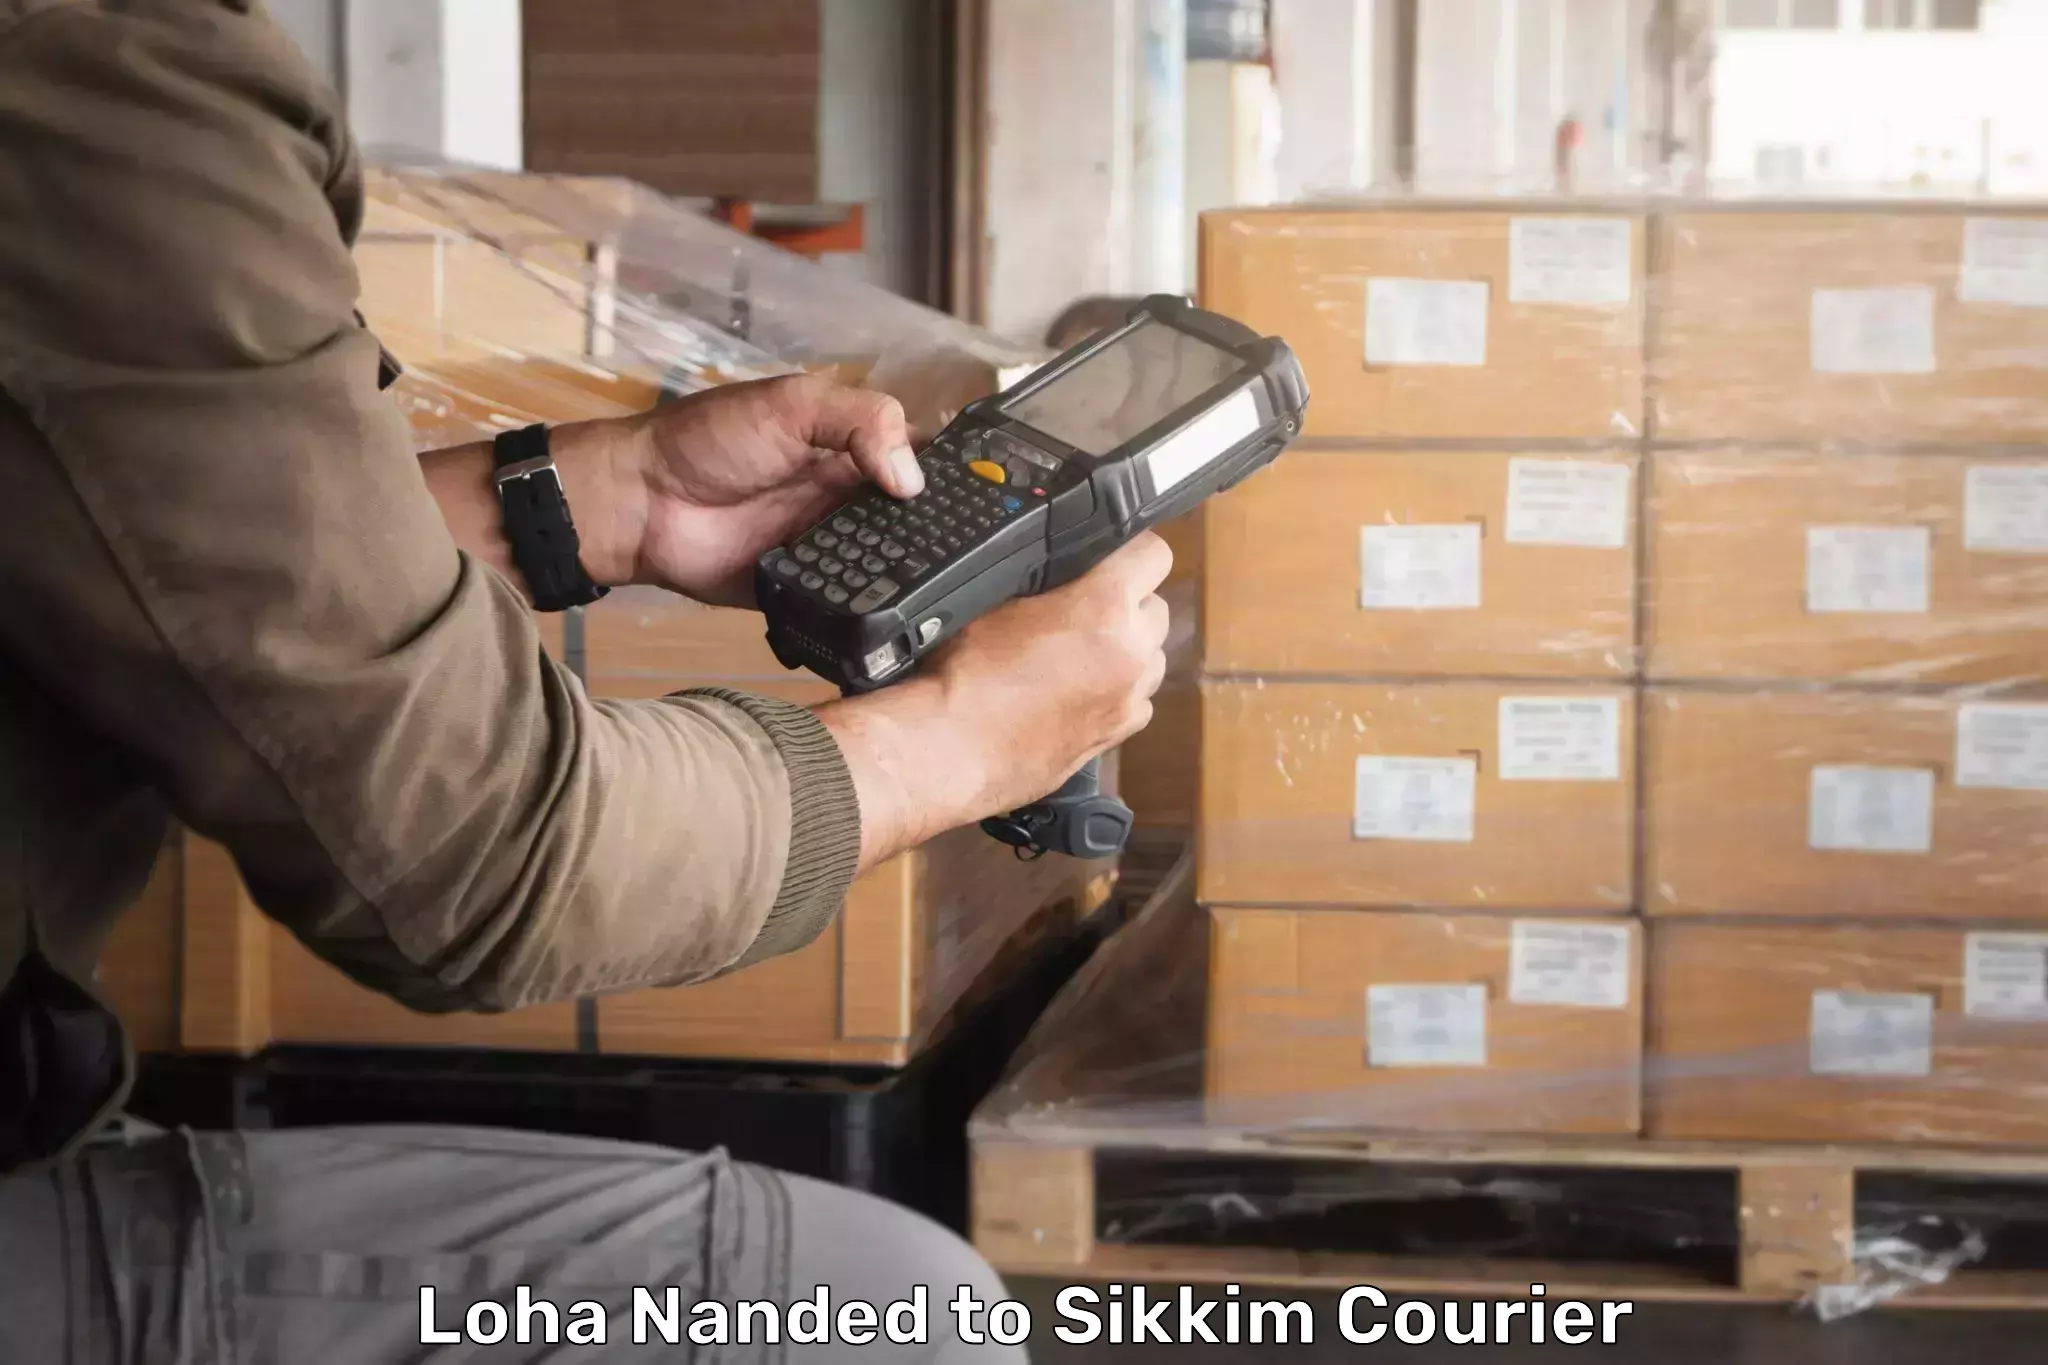 Logistics service provider Loha Nanded to Sikkim